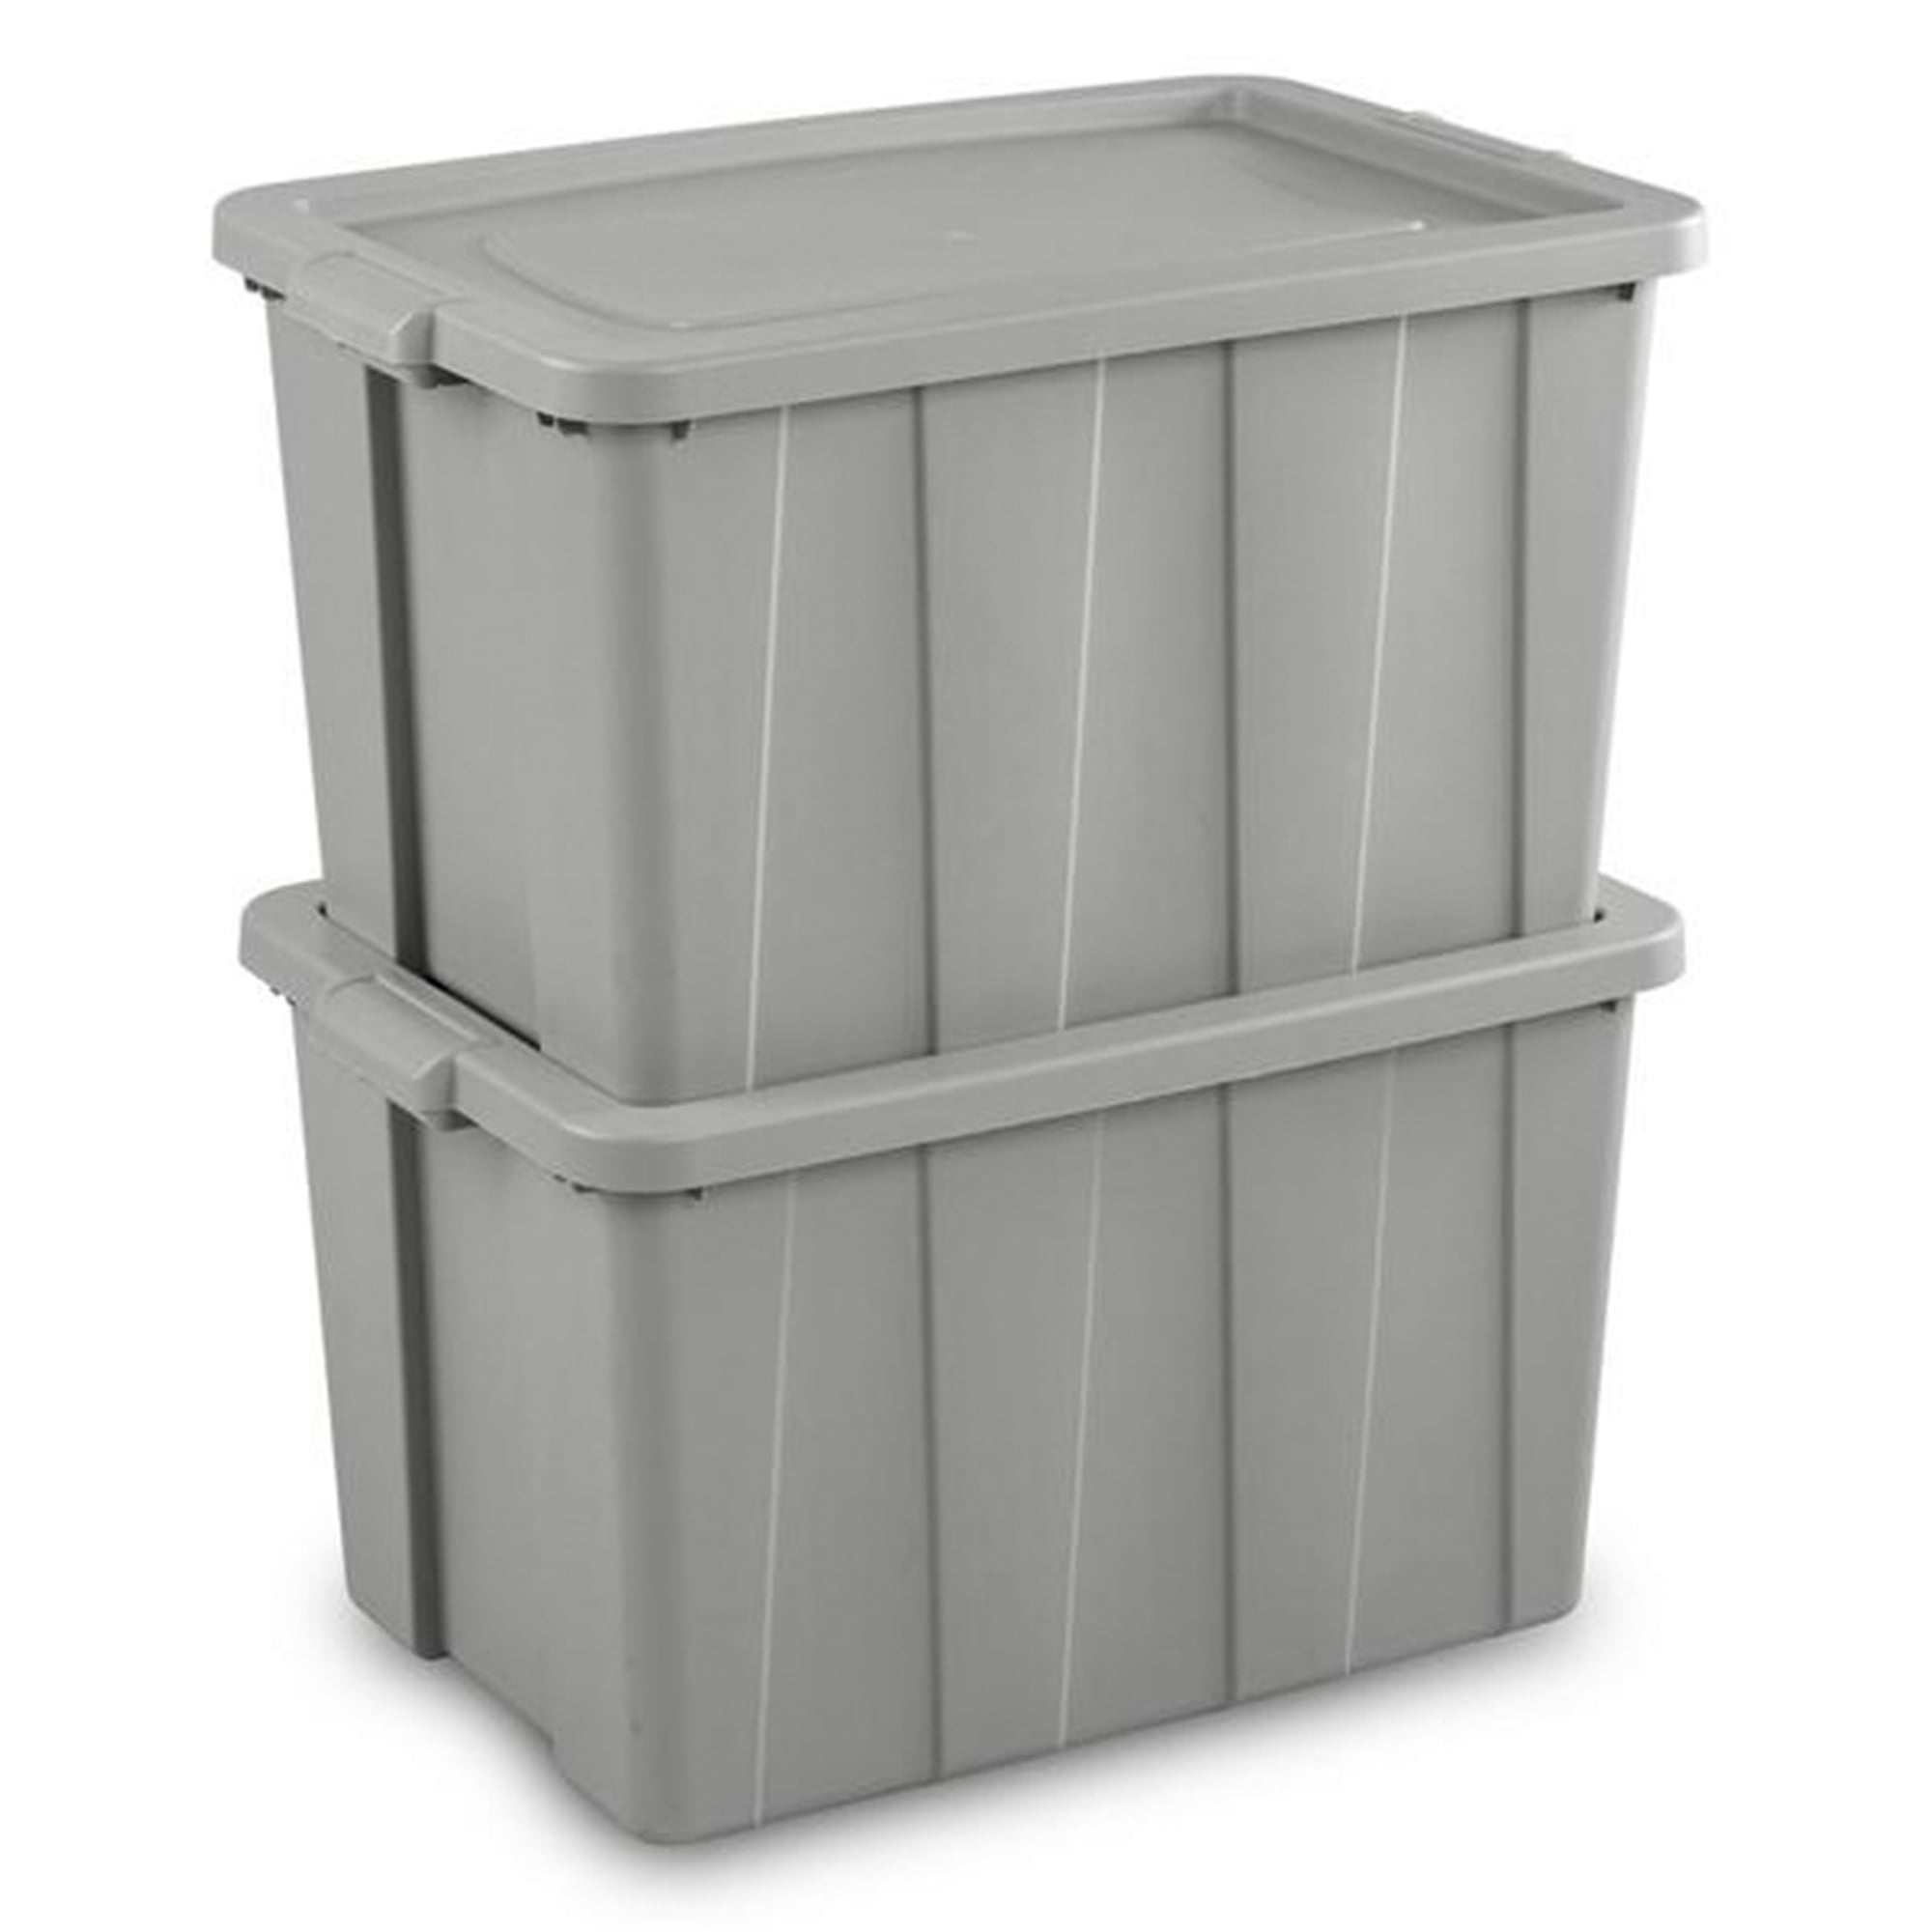 Sterilite Tuff1 30 Gal Plastic Storage Tote Container Bin w/ Lid (8 Pack) - 3